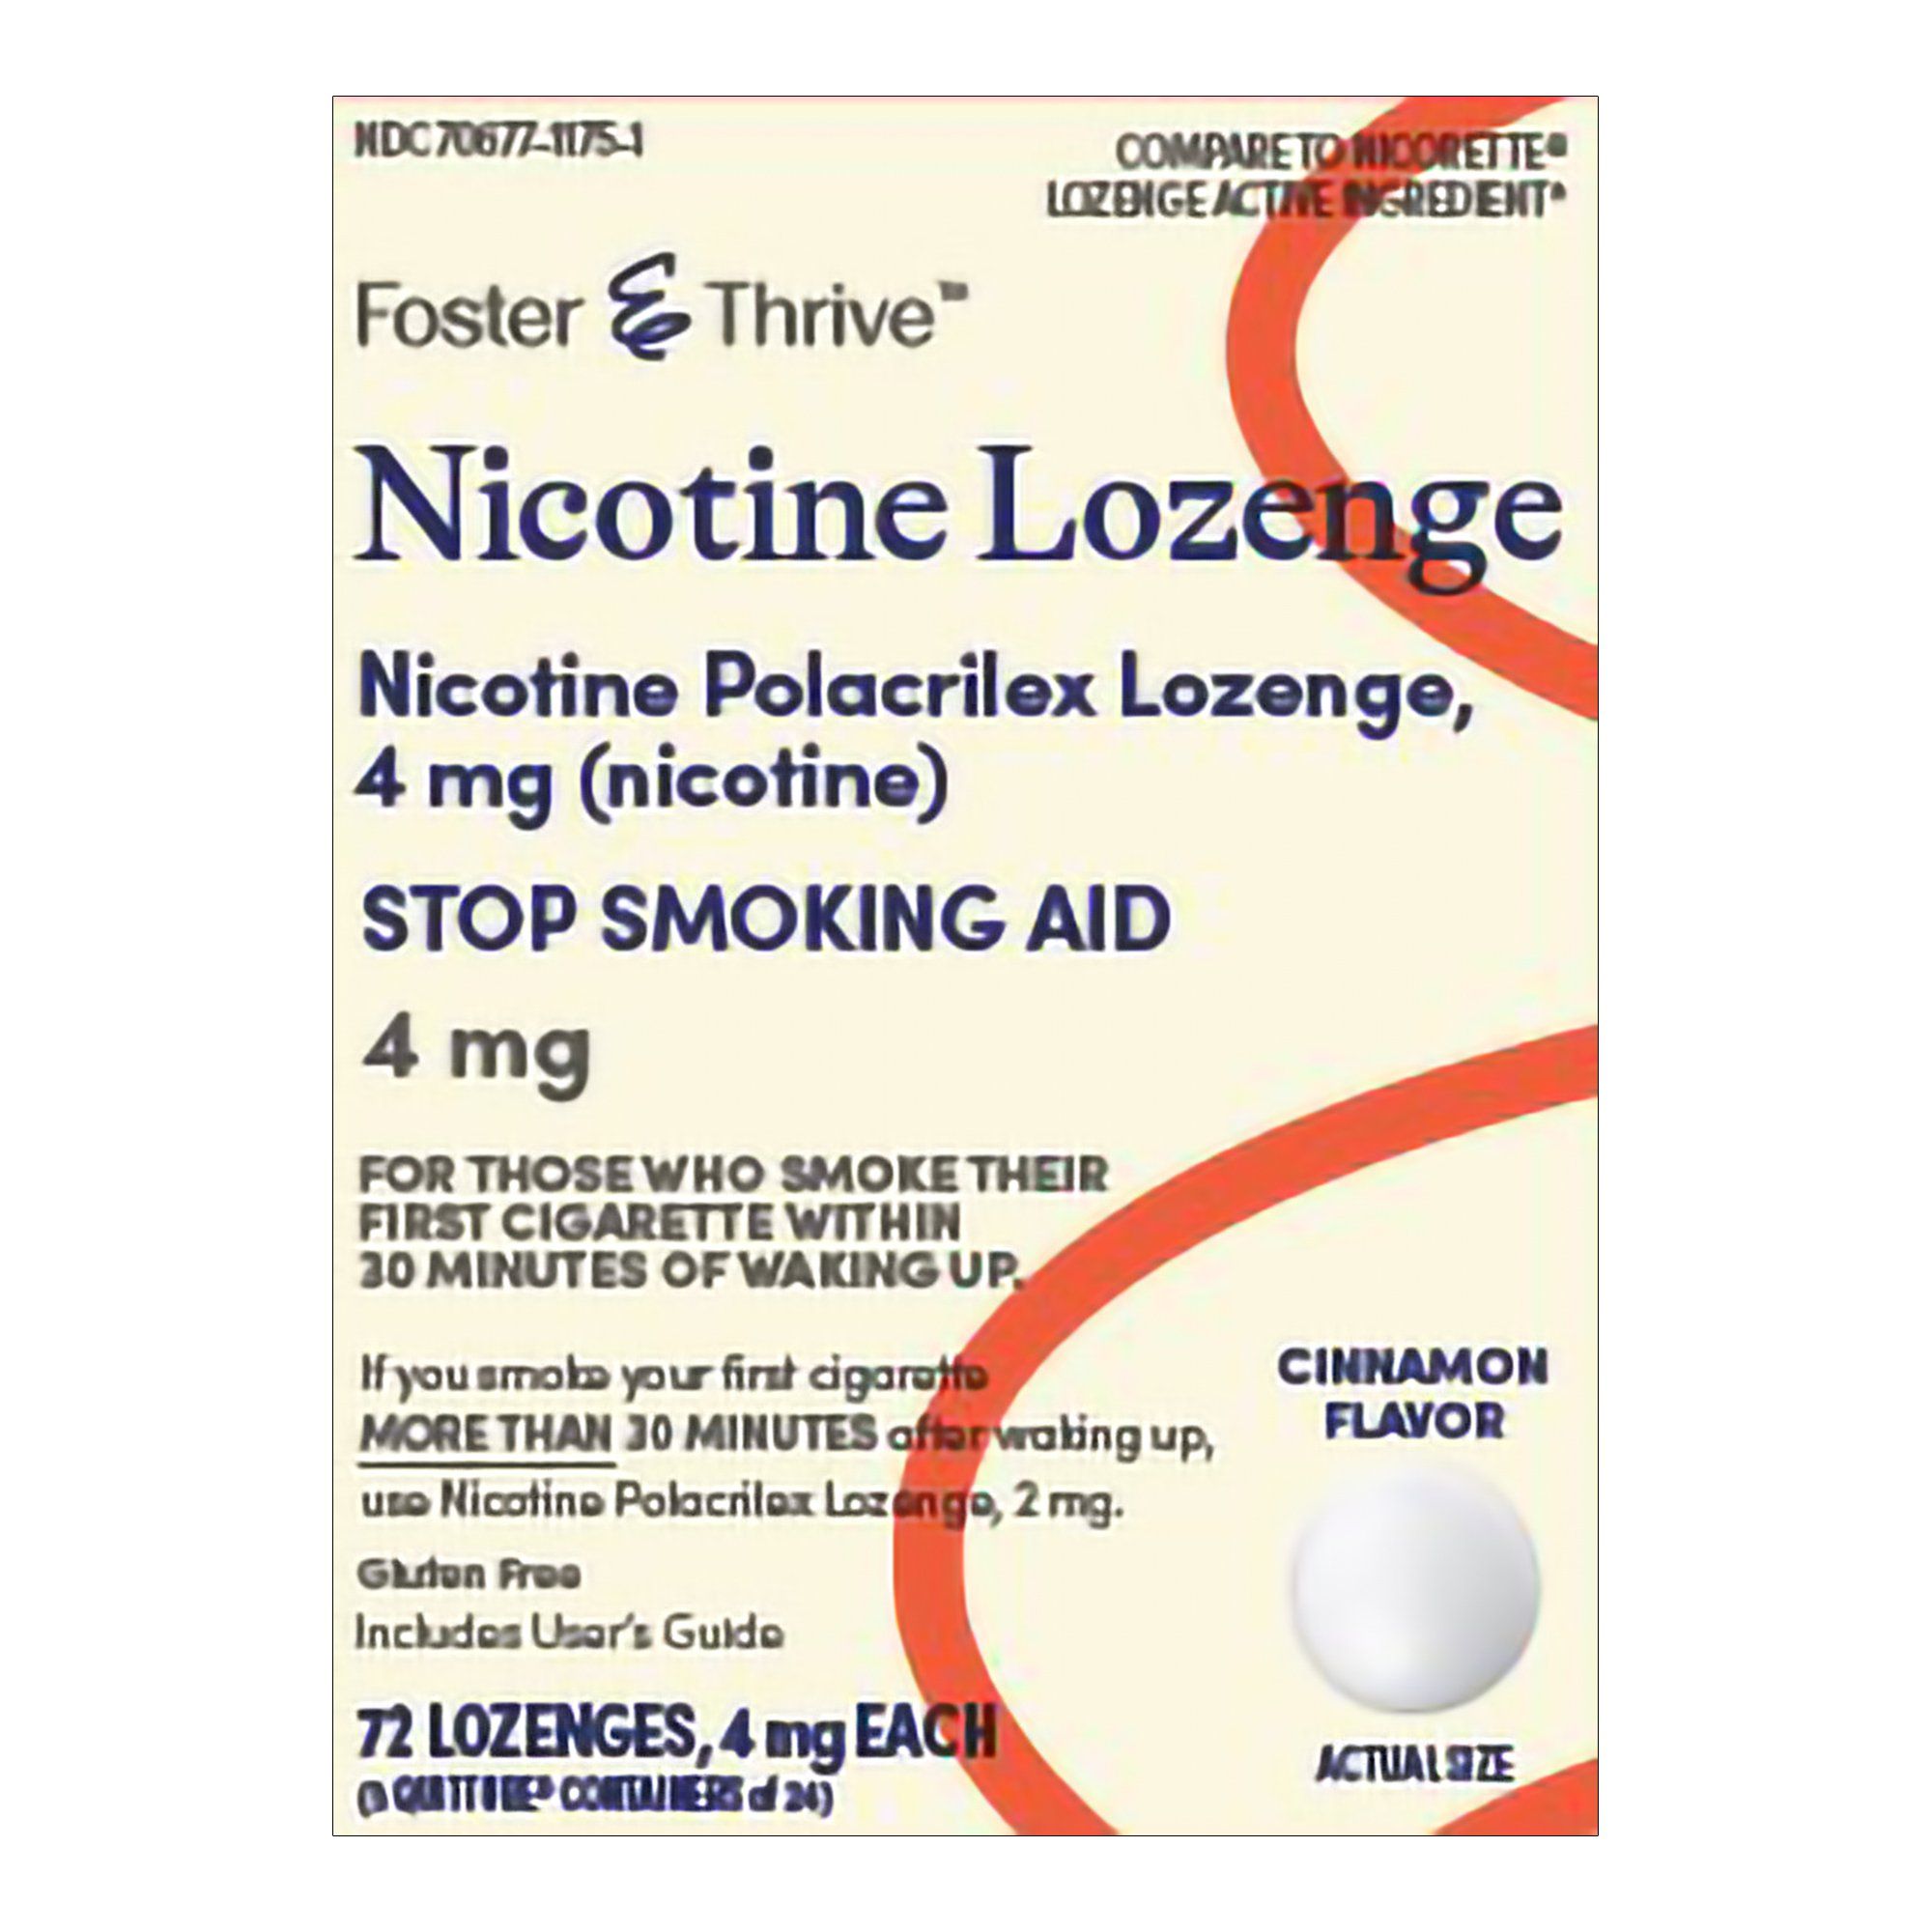 Foster & Thrive Stop Smoking Aid Nicotine Lozenges, 4 mg, Cinnamon Flavor - 72 ct